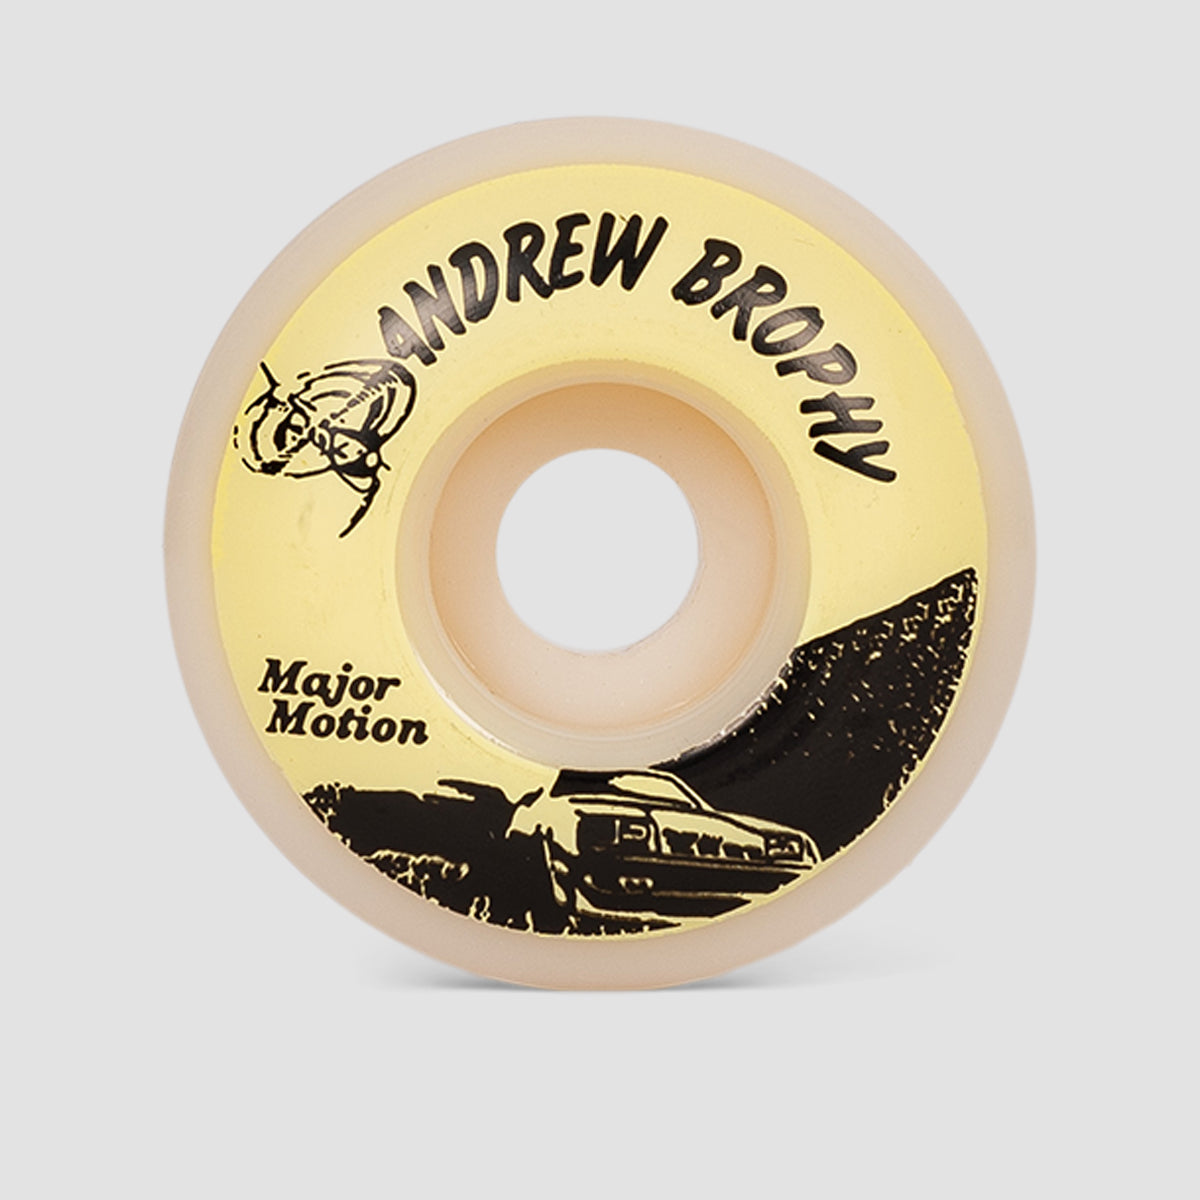 Wayward Andrew Brophy Classic Shape 101A Skateboard Wheels 54mm